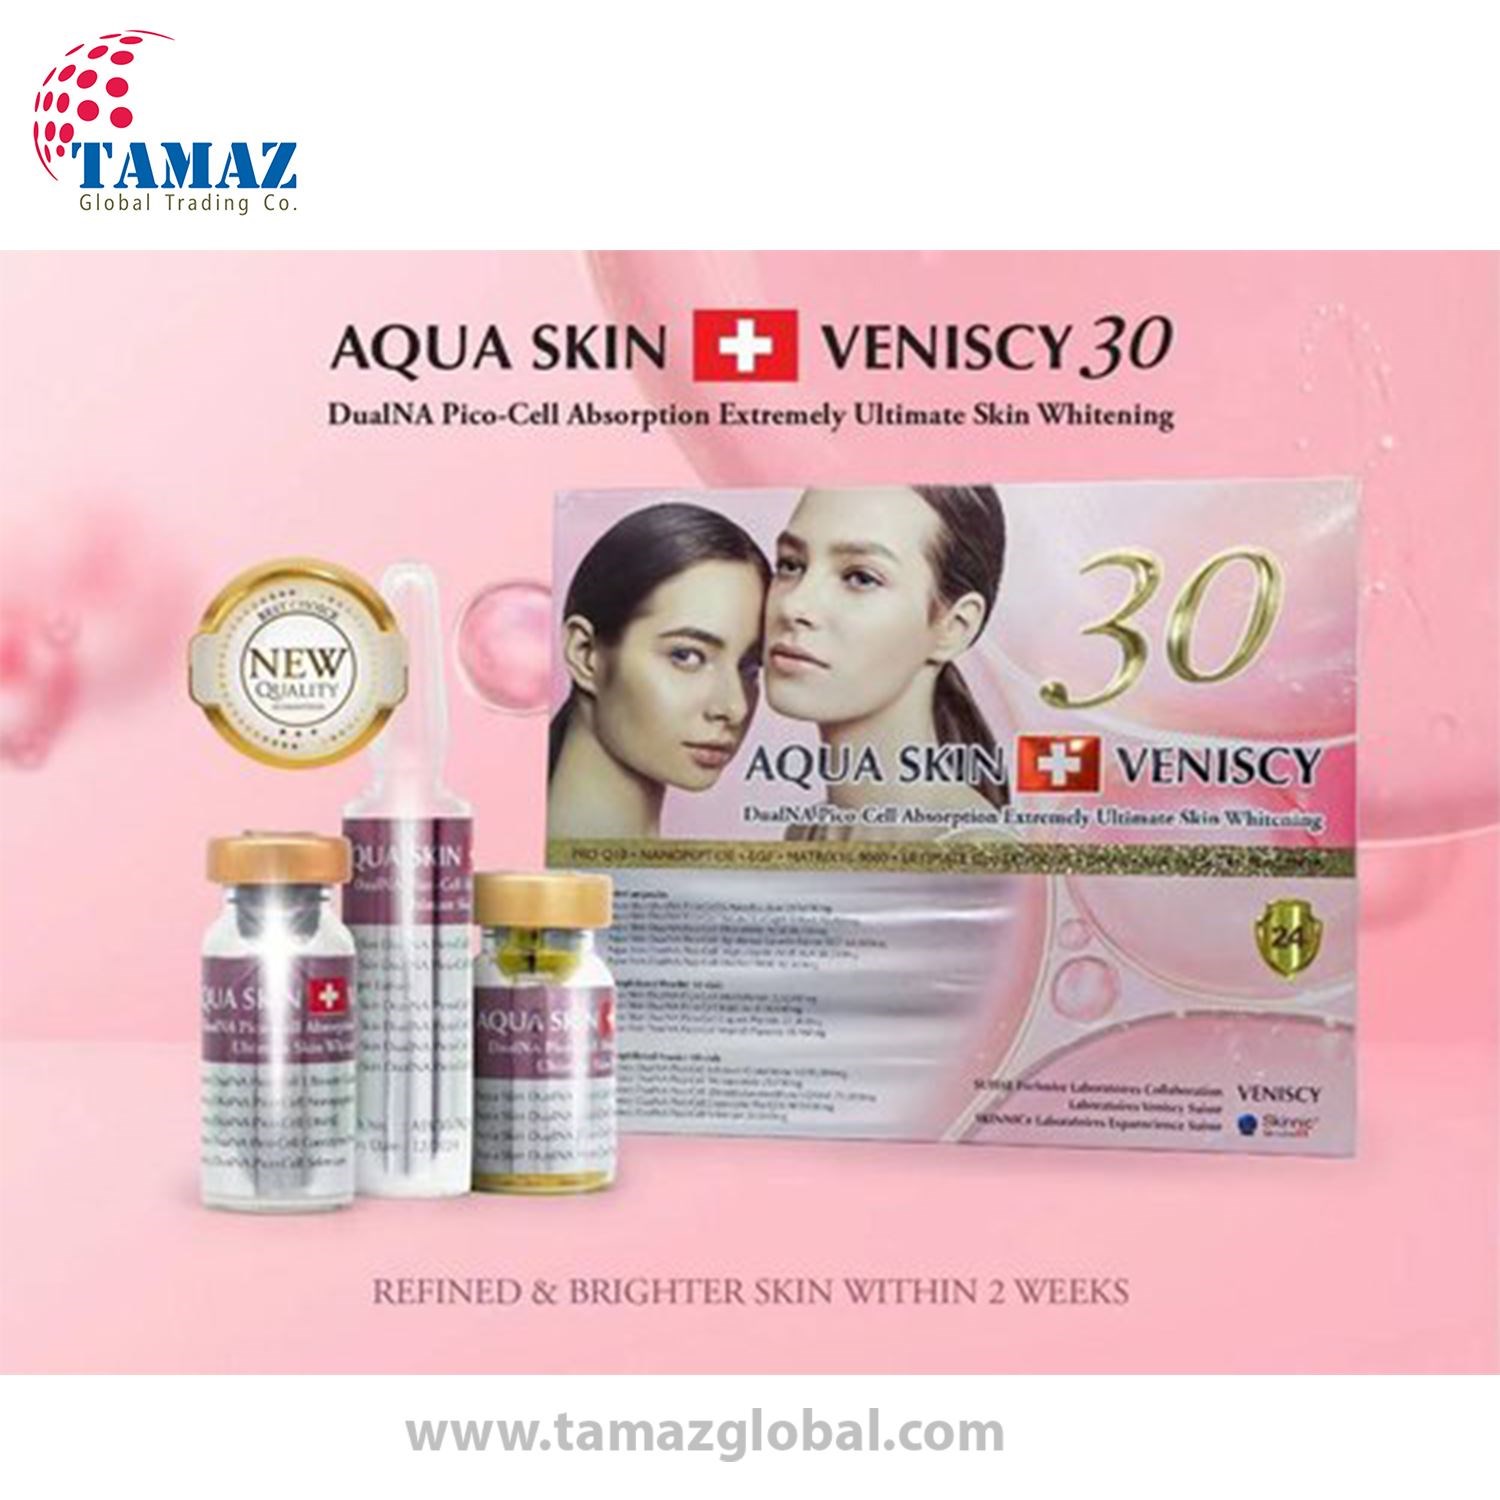 aqua skin veniscy 30 dualna pico cell absorbtion